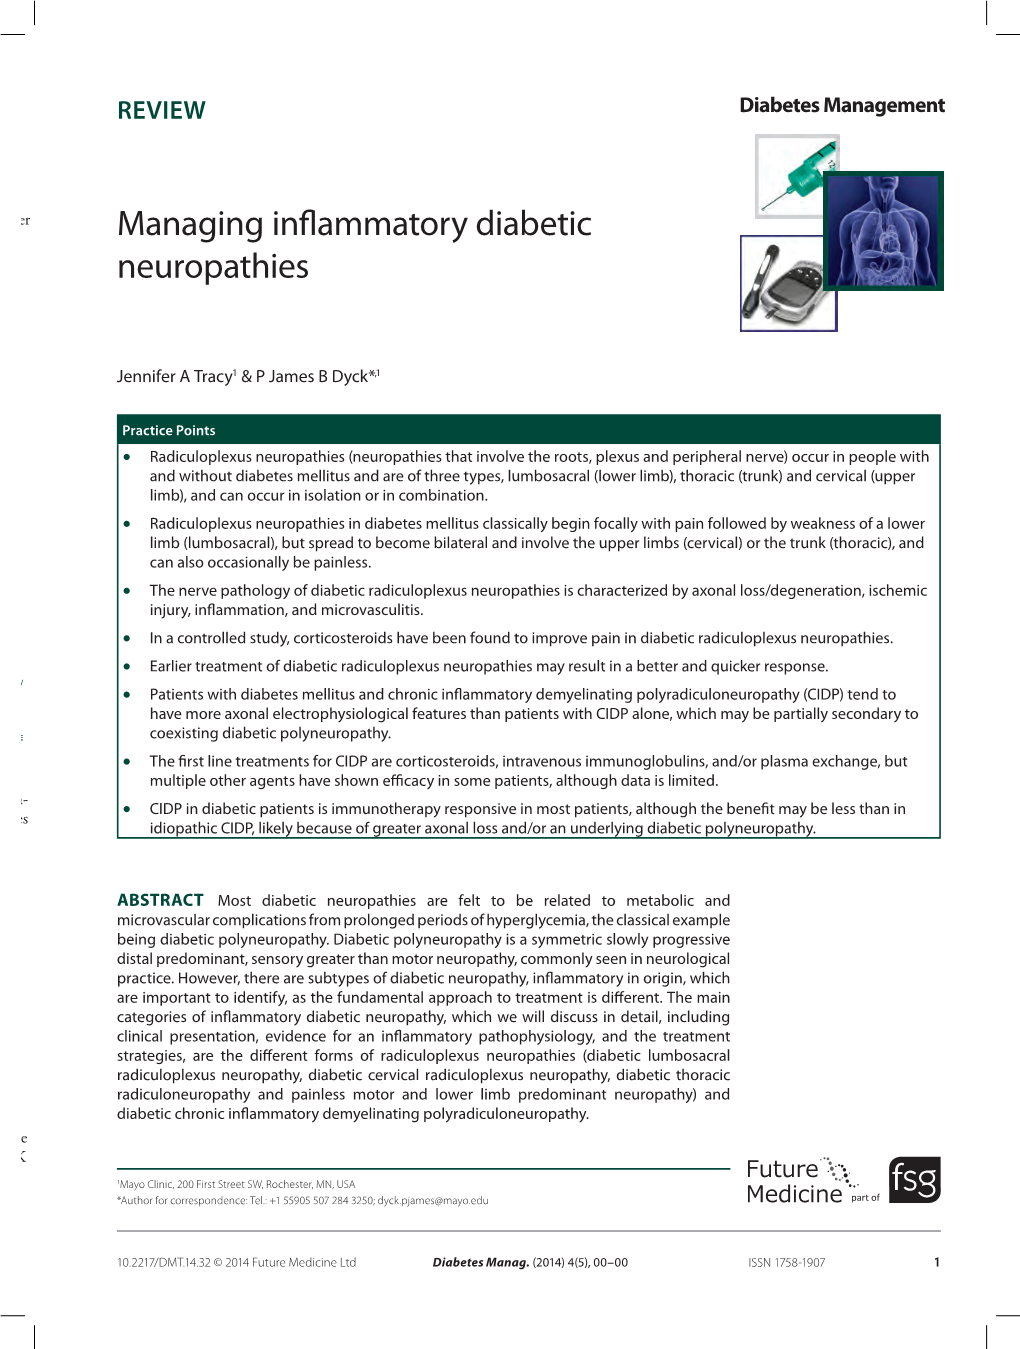 Managing Inflammatory Diabetic Neuropathies